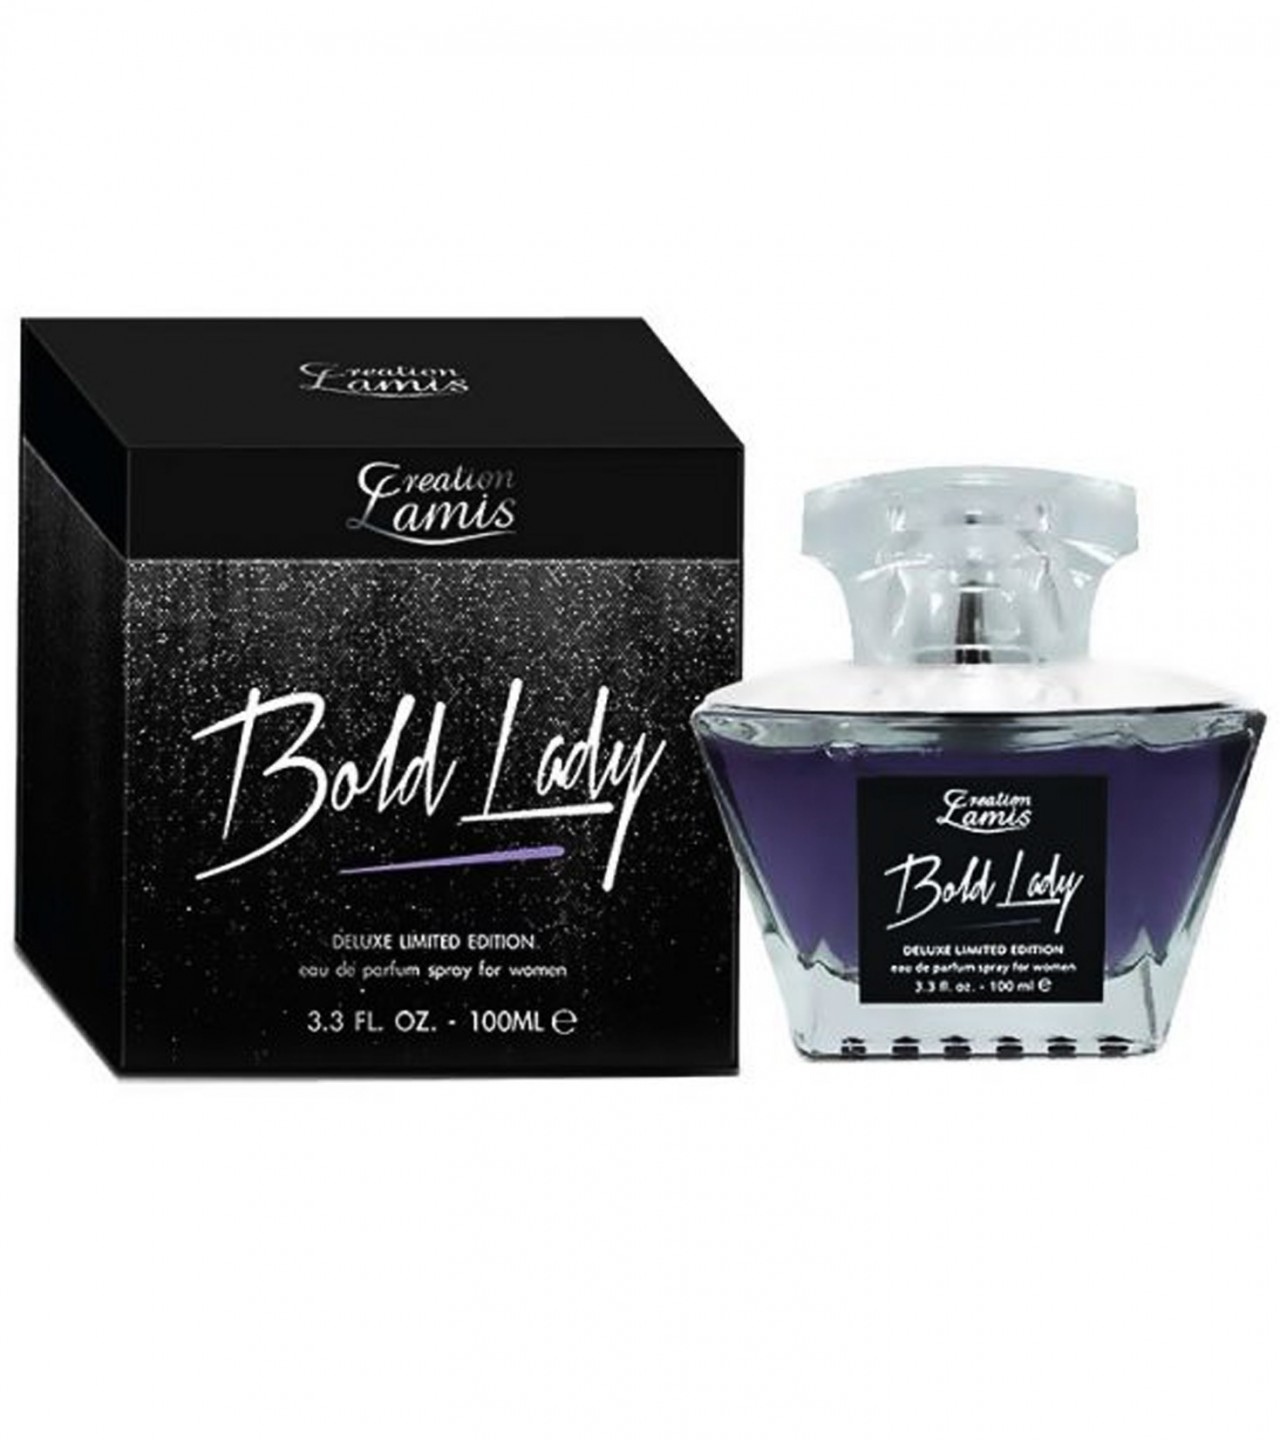 Creation Lamis Bold Lady Perfume For Women - 100 ml